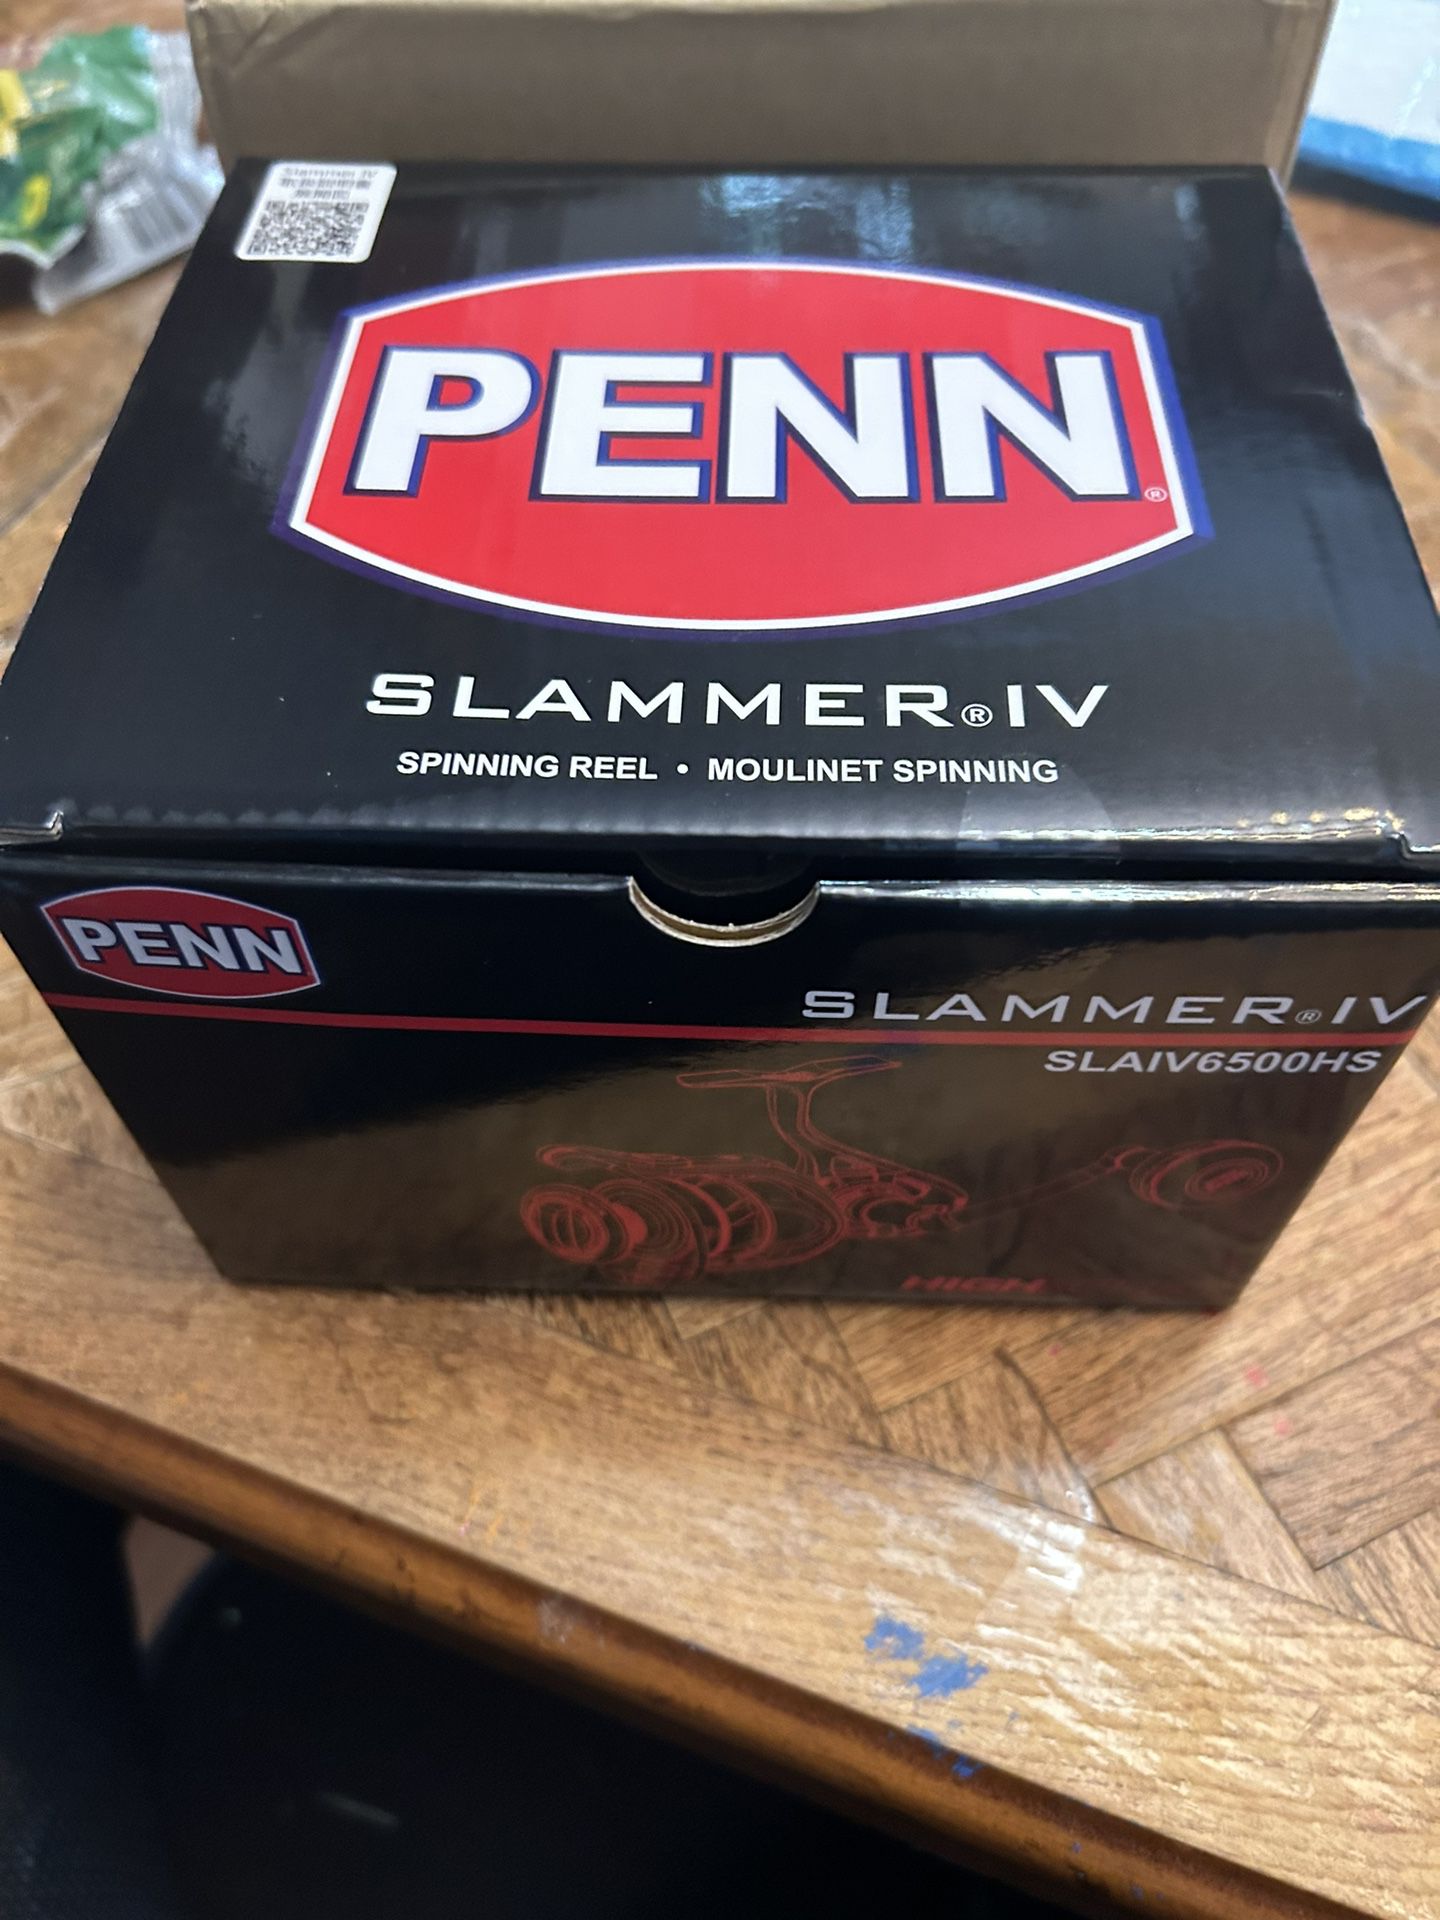 Penn Slammer IV 6500HS $235 - Free Rod Or $5 For A Nicer Rod W Purchase